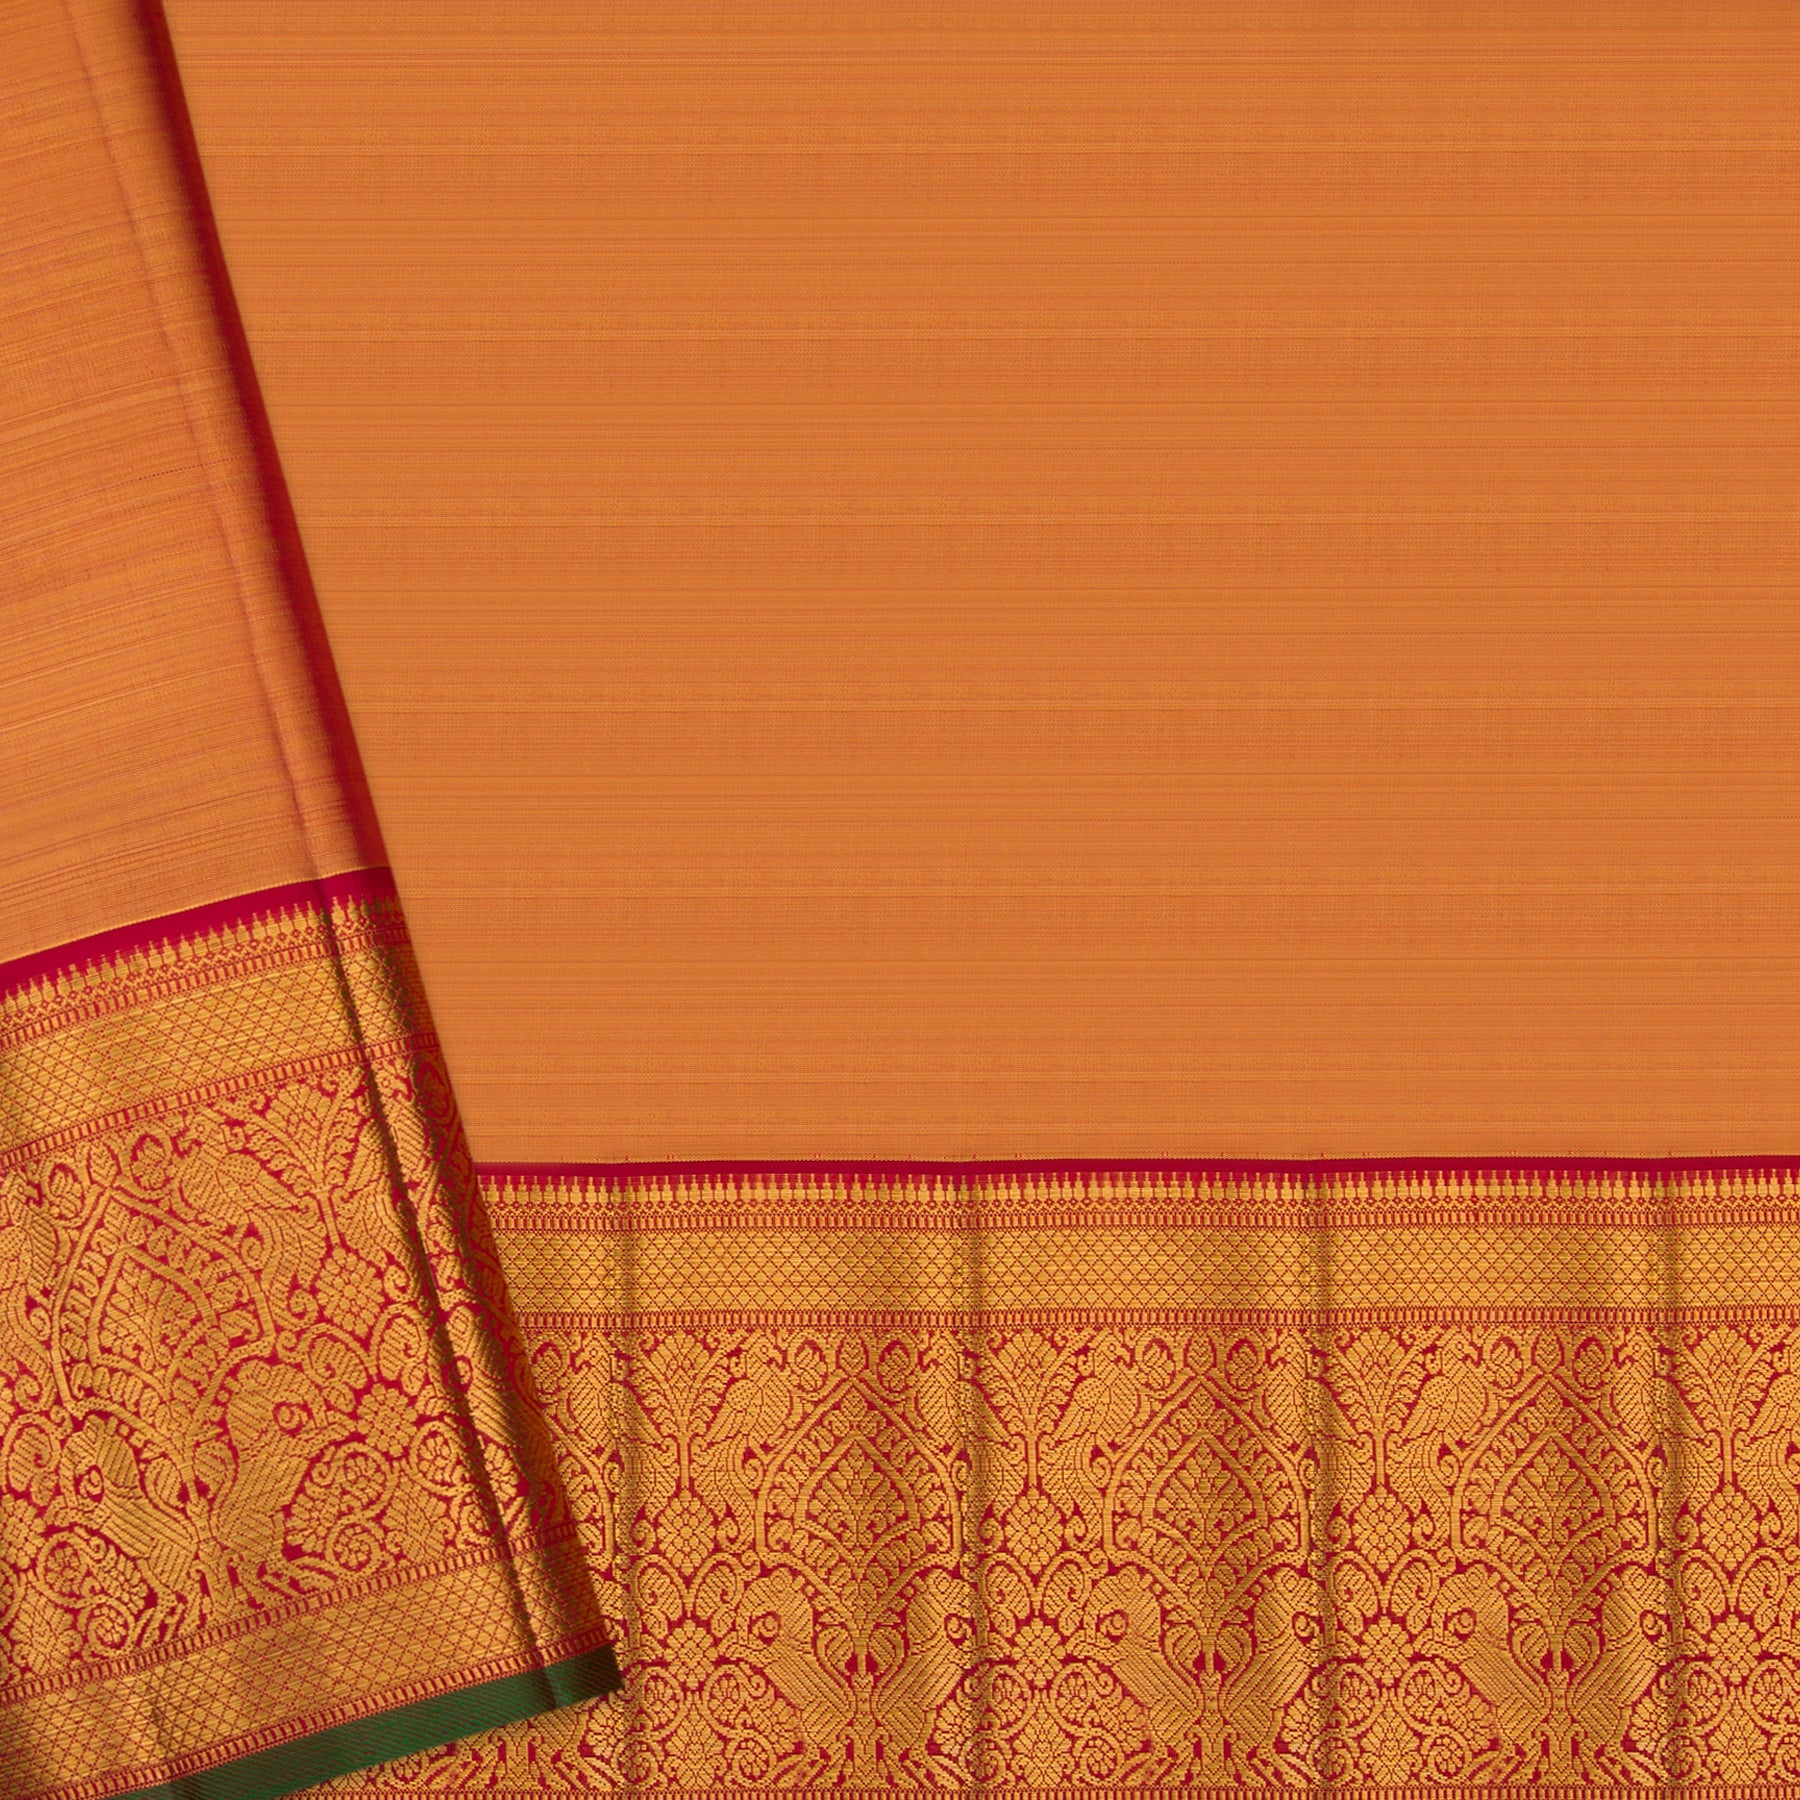 Kanakavalli Kanjivaram Silk Sari 22-110-HS001-12473 - Blouse View